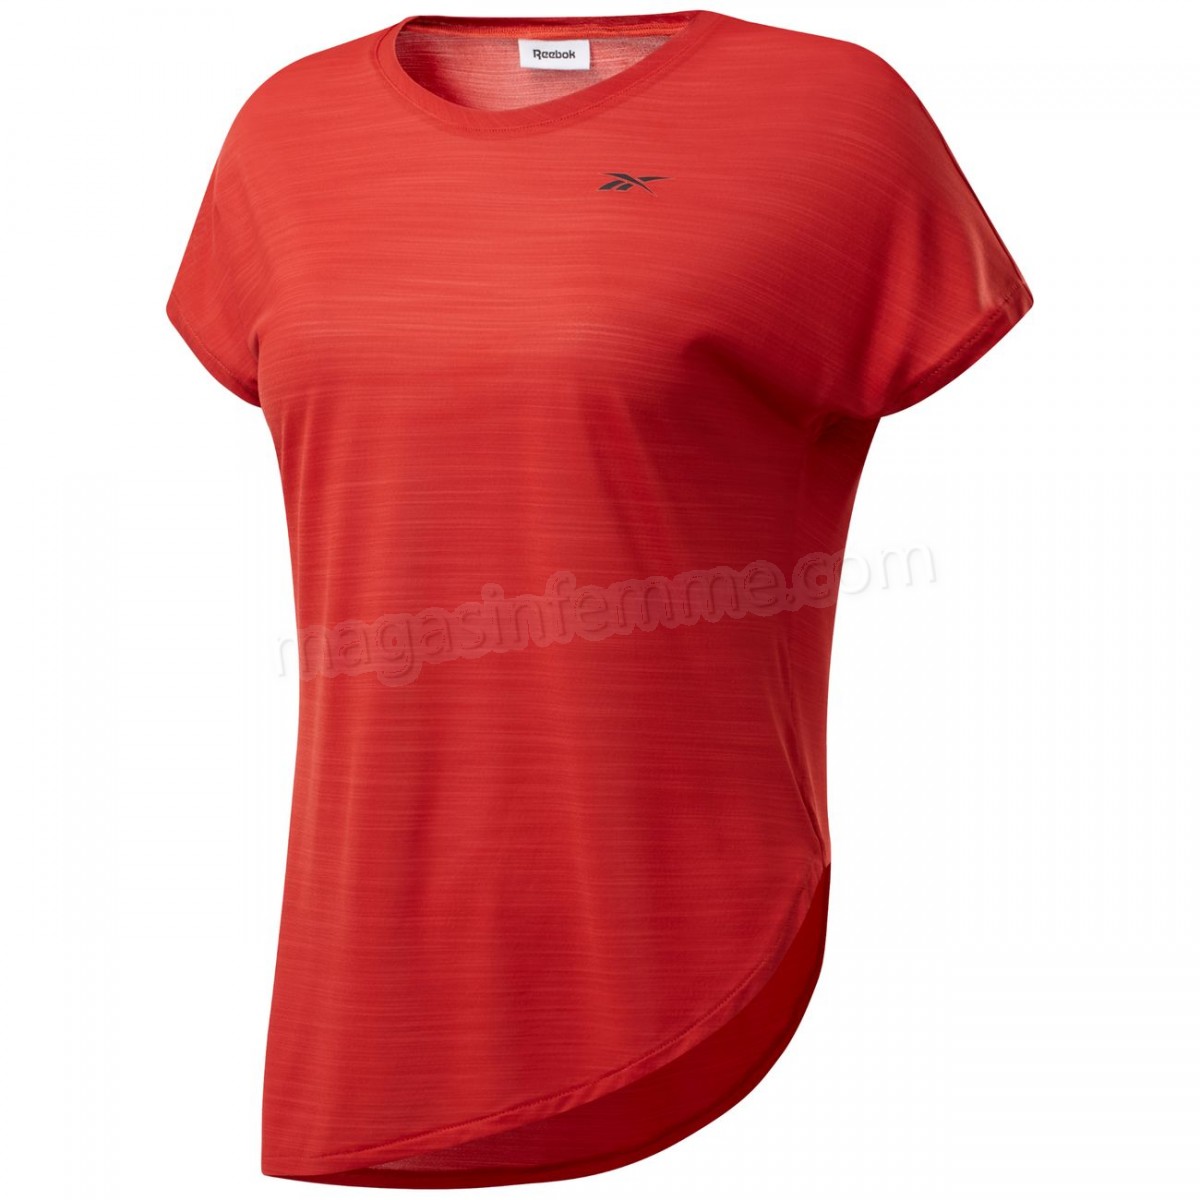 Reebok-Fitness femme REEBOK T-shirt femme Reebok Workout Ready ActivChill en solde - -1